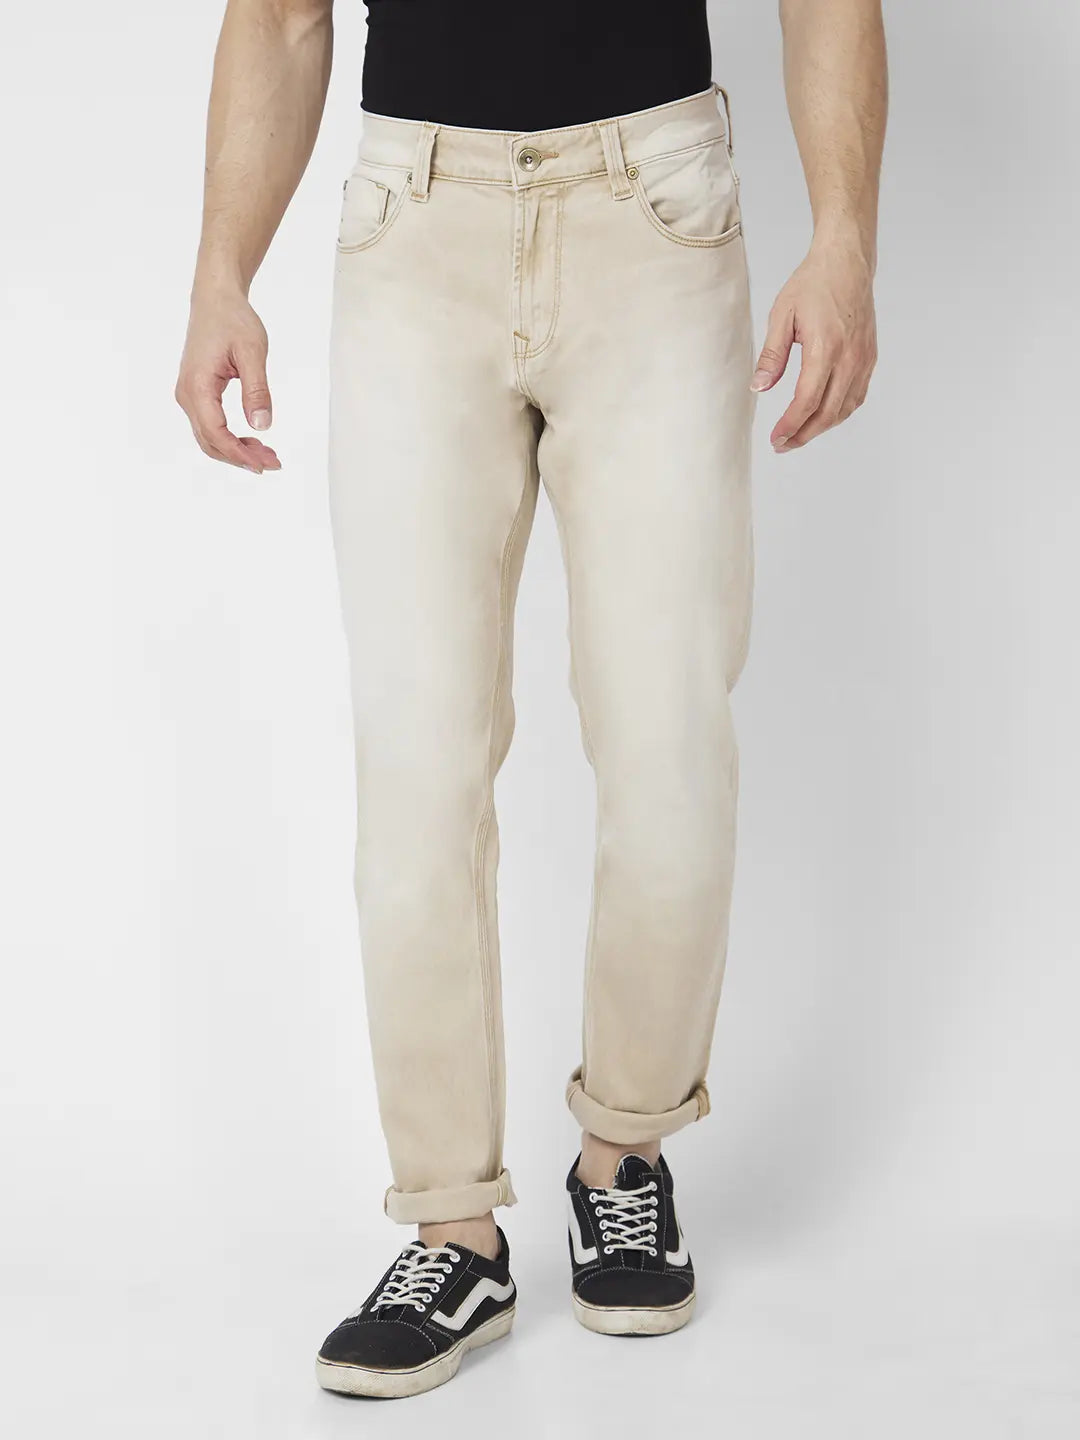 Spykar Men Light Sand Cotton Stretch Slim Fit Narrow Length Clean Look Low Rise Jeans (Skinny)